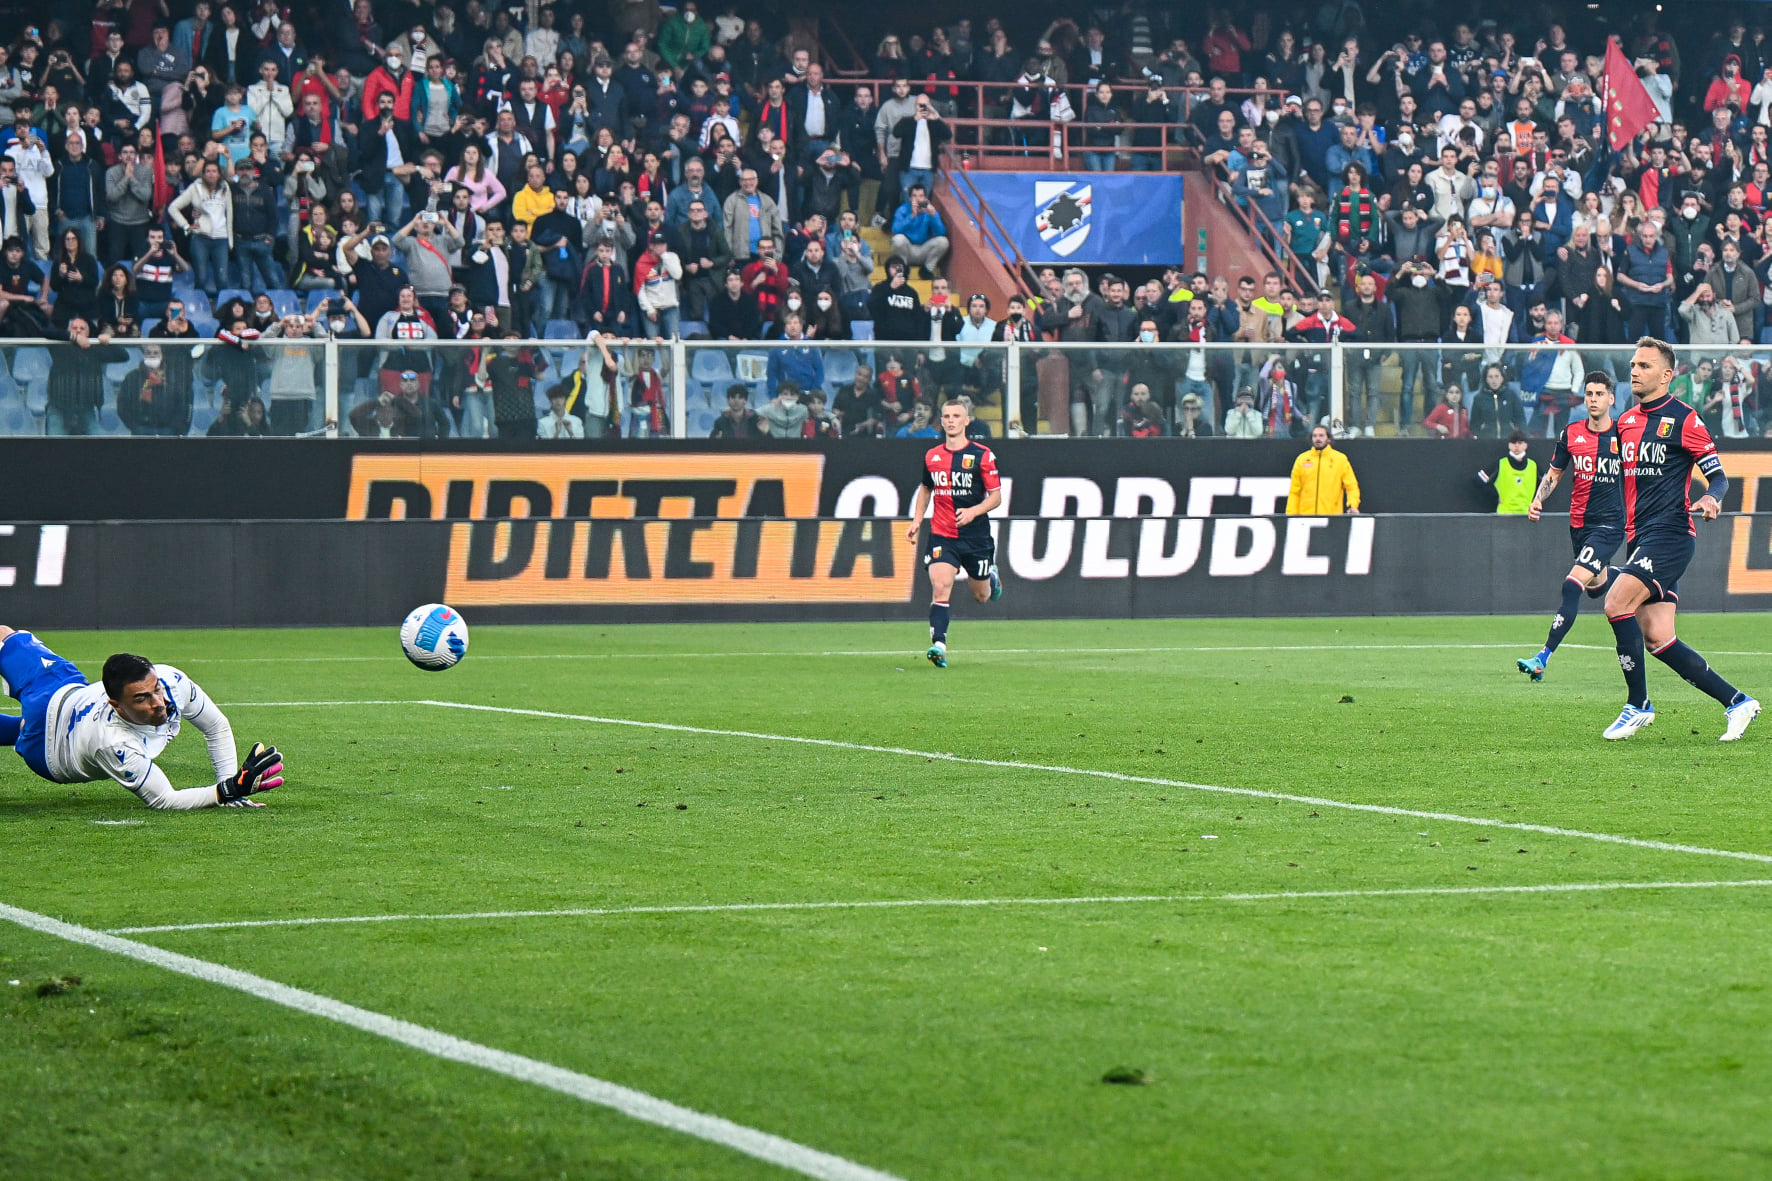 Sampdoria 1-0 Genoa, Sabiri and Audero secure bragging rights for Sampdoria